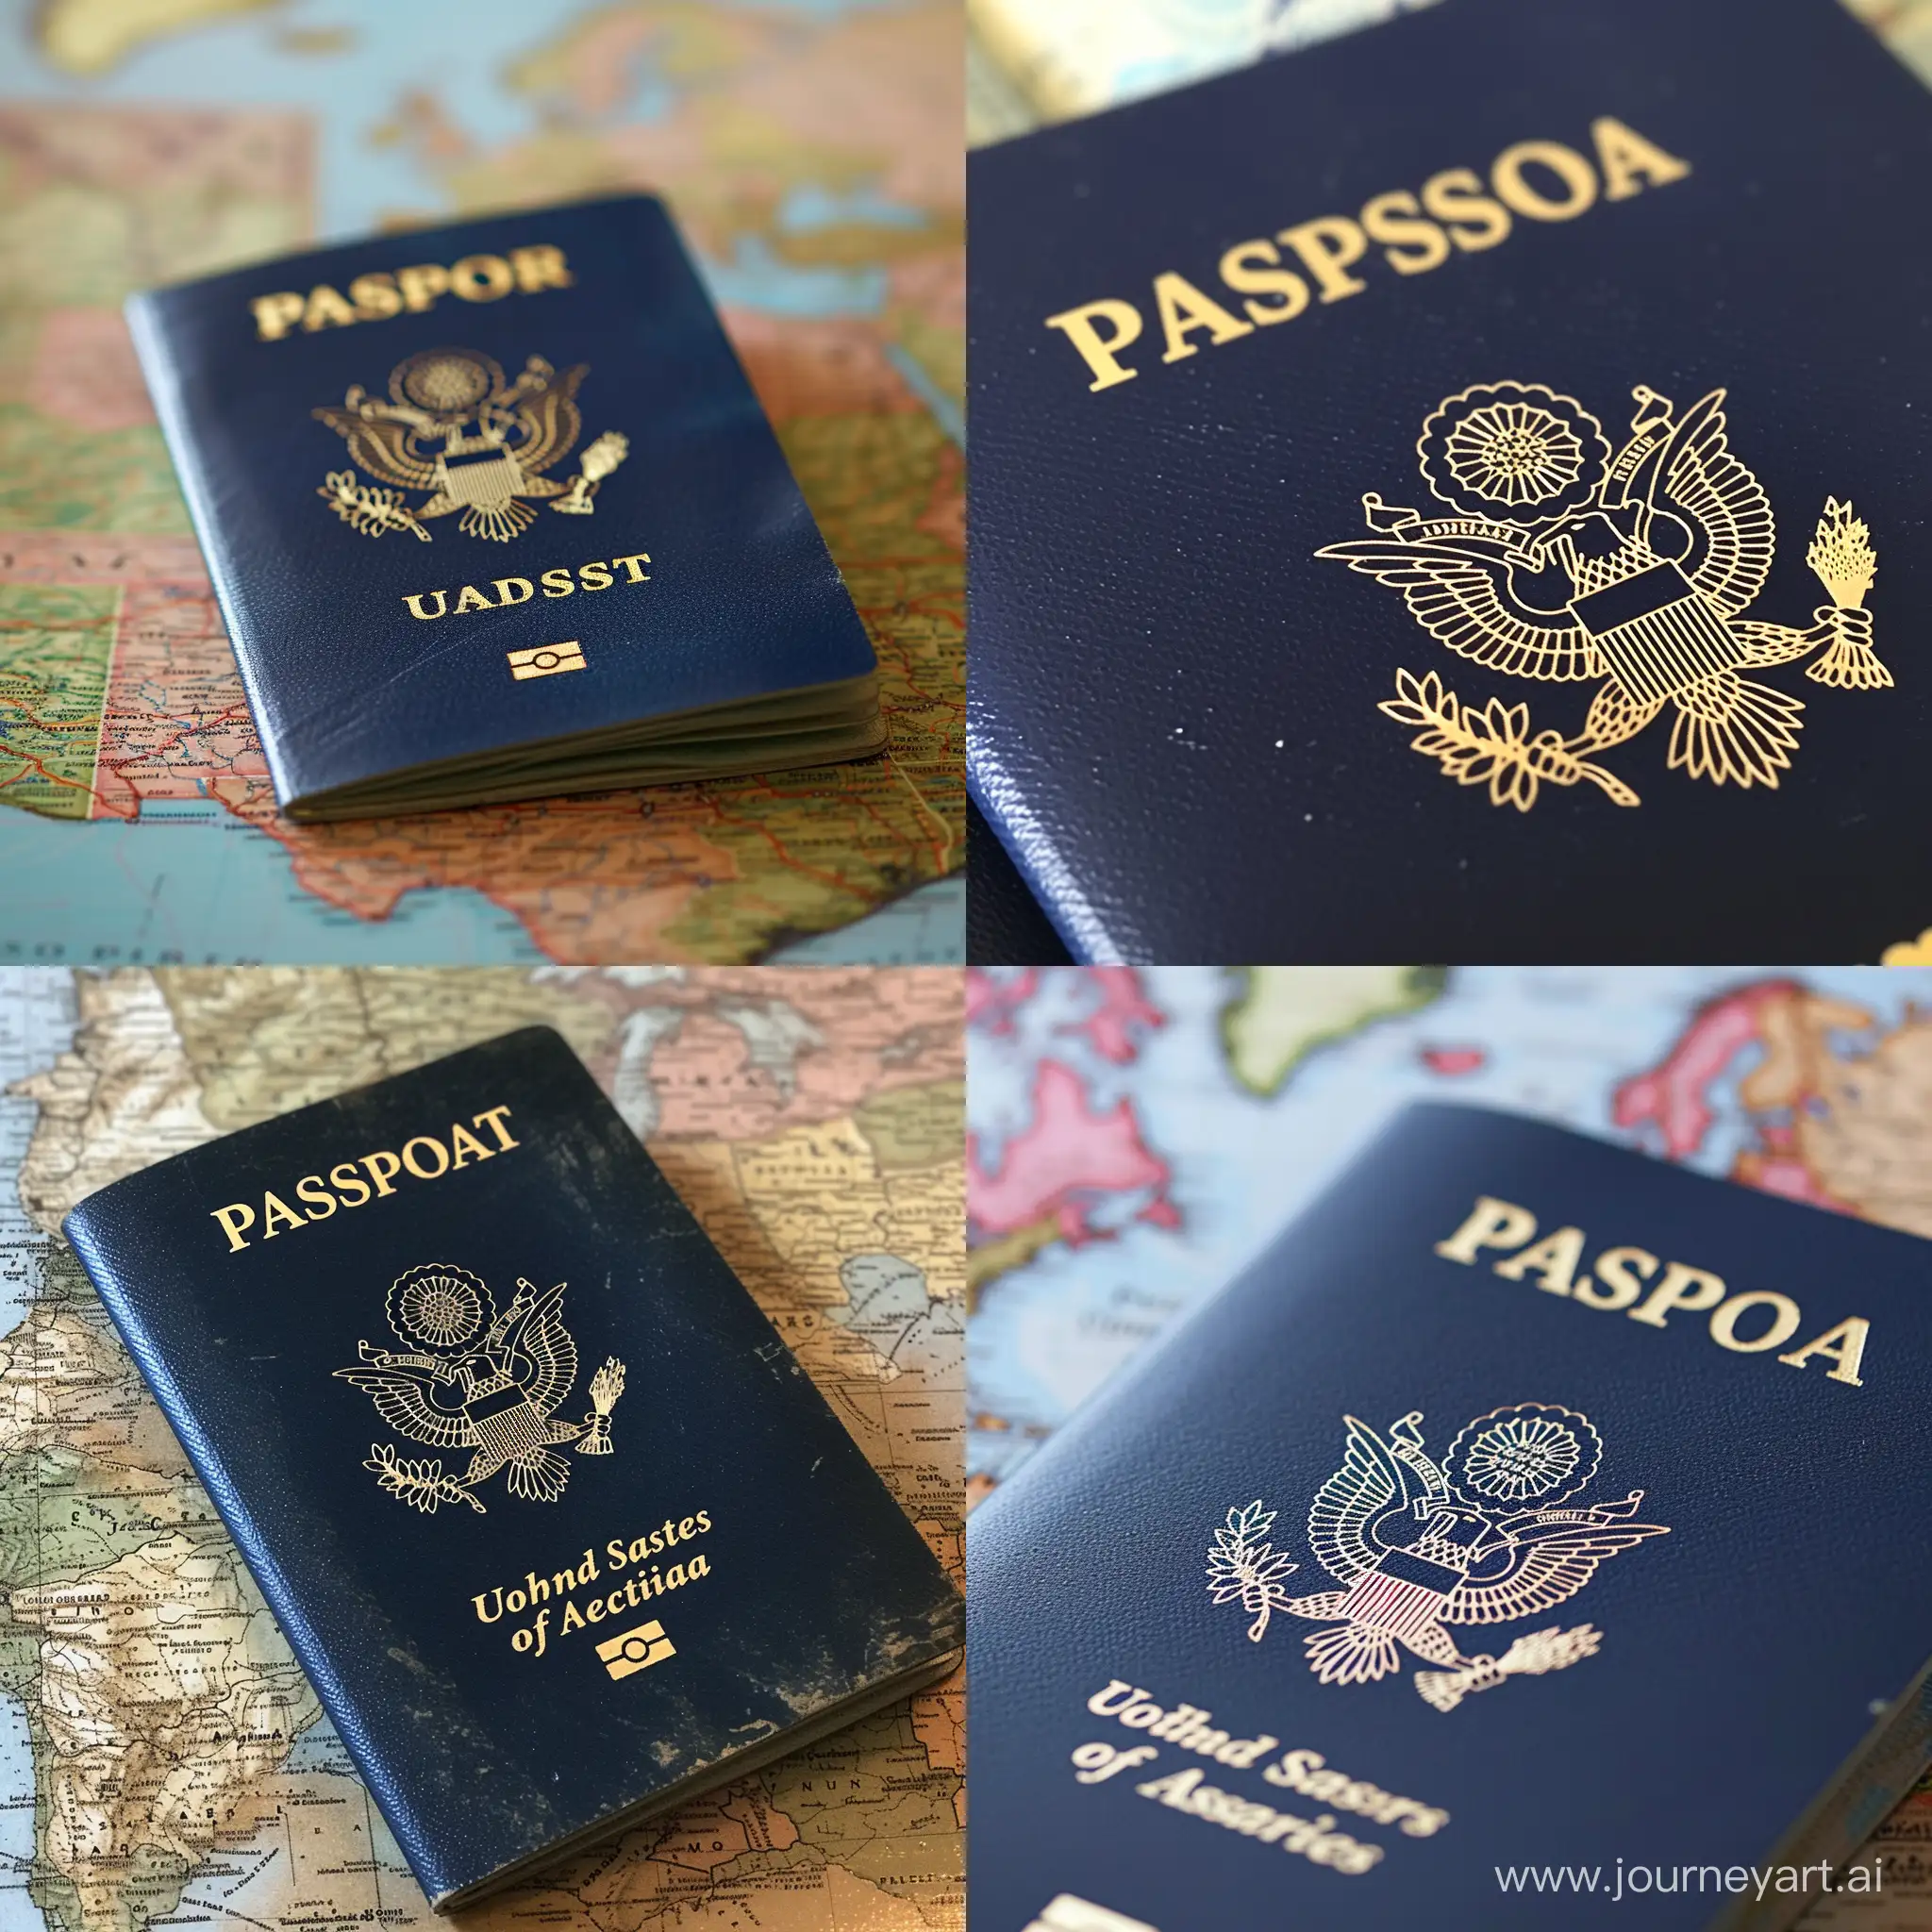 John-Weeks-USA-Passport-Photo-Official-Document-Portrait